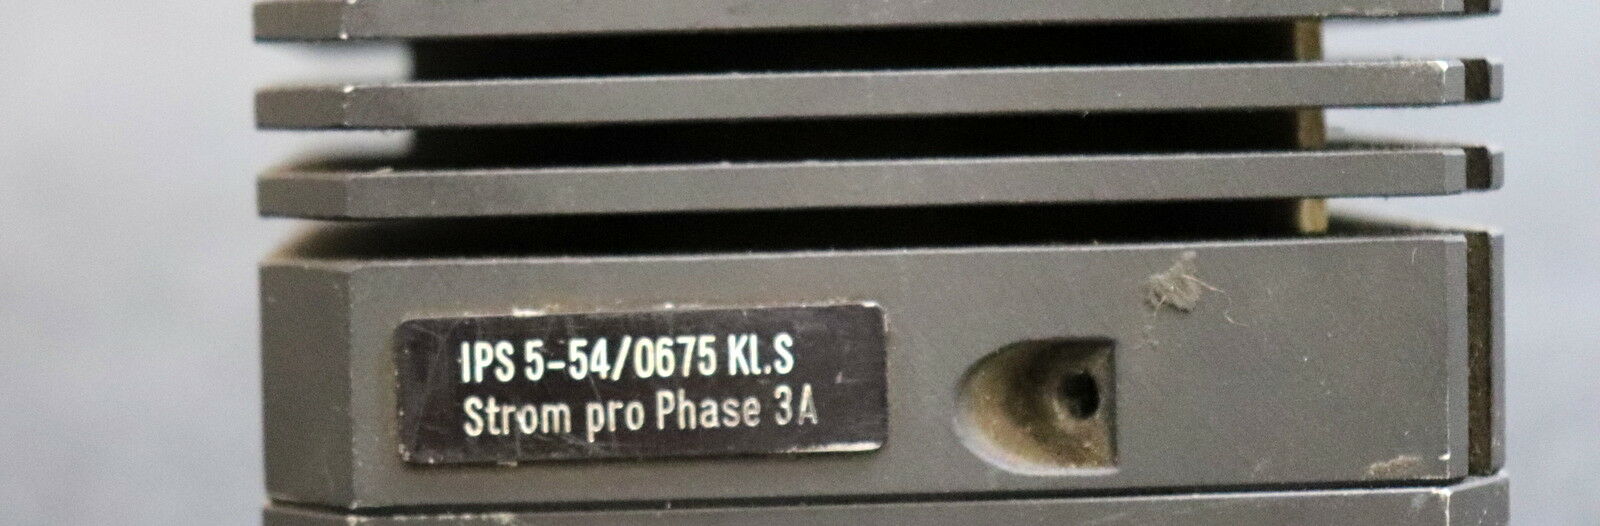 CARL ZEISS JENA Elektromotor IPS 5-54 / 0675 Kl. S Wellendurchmesser 6mm x 12mm